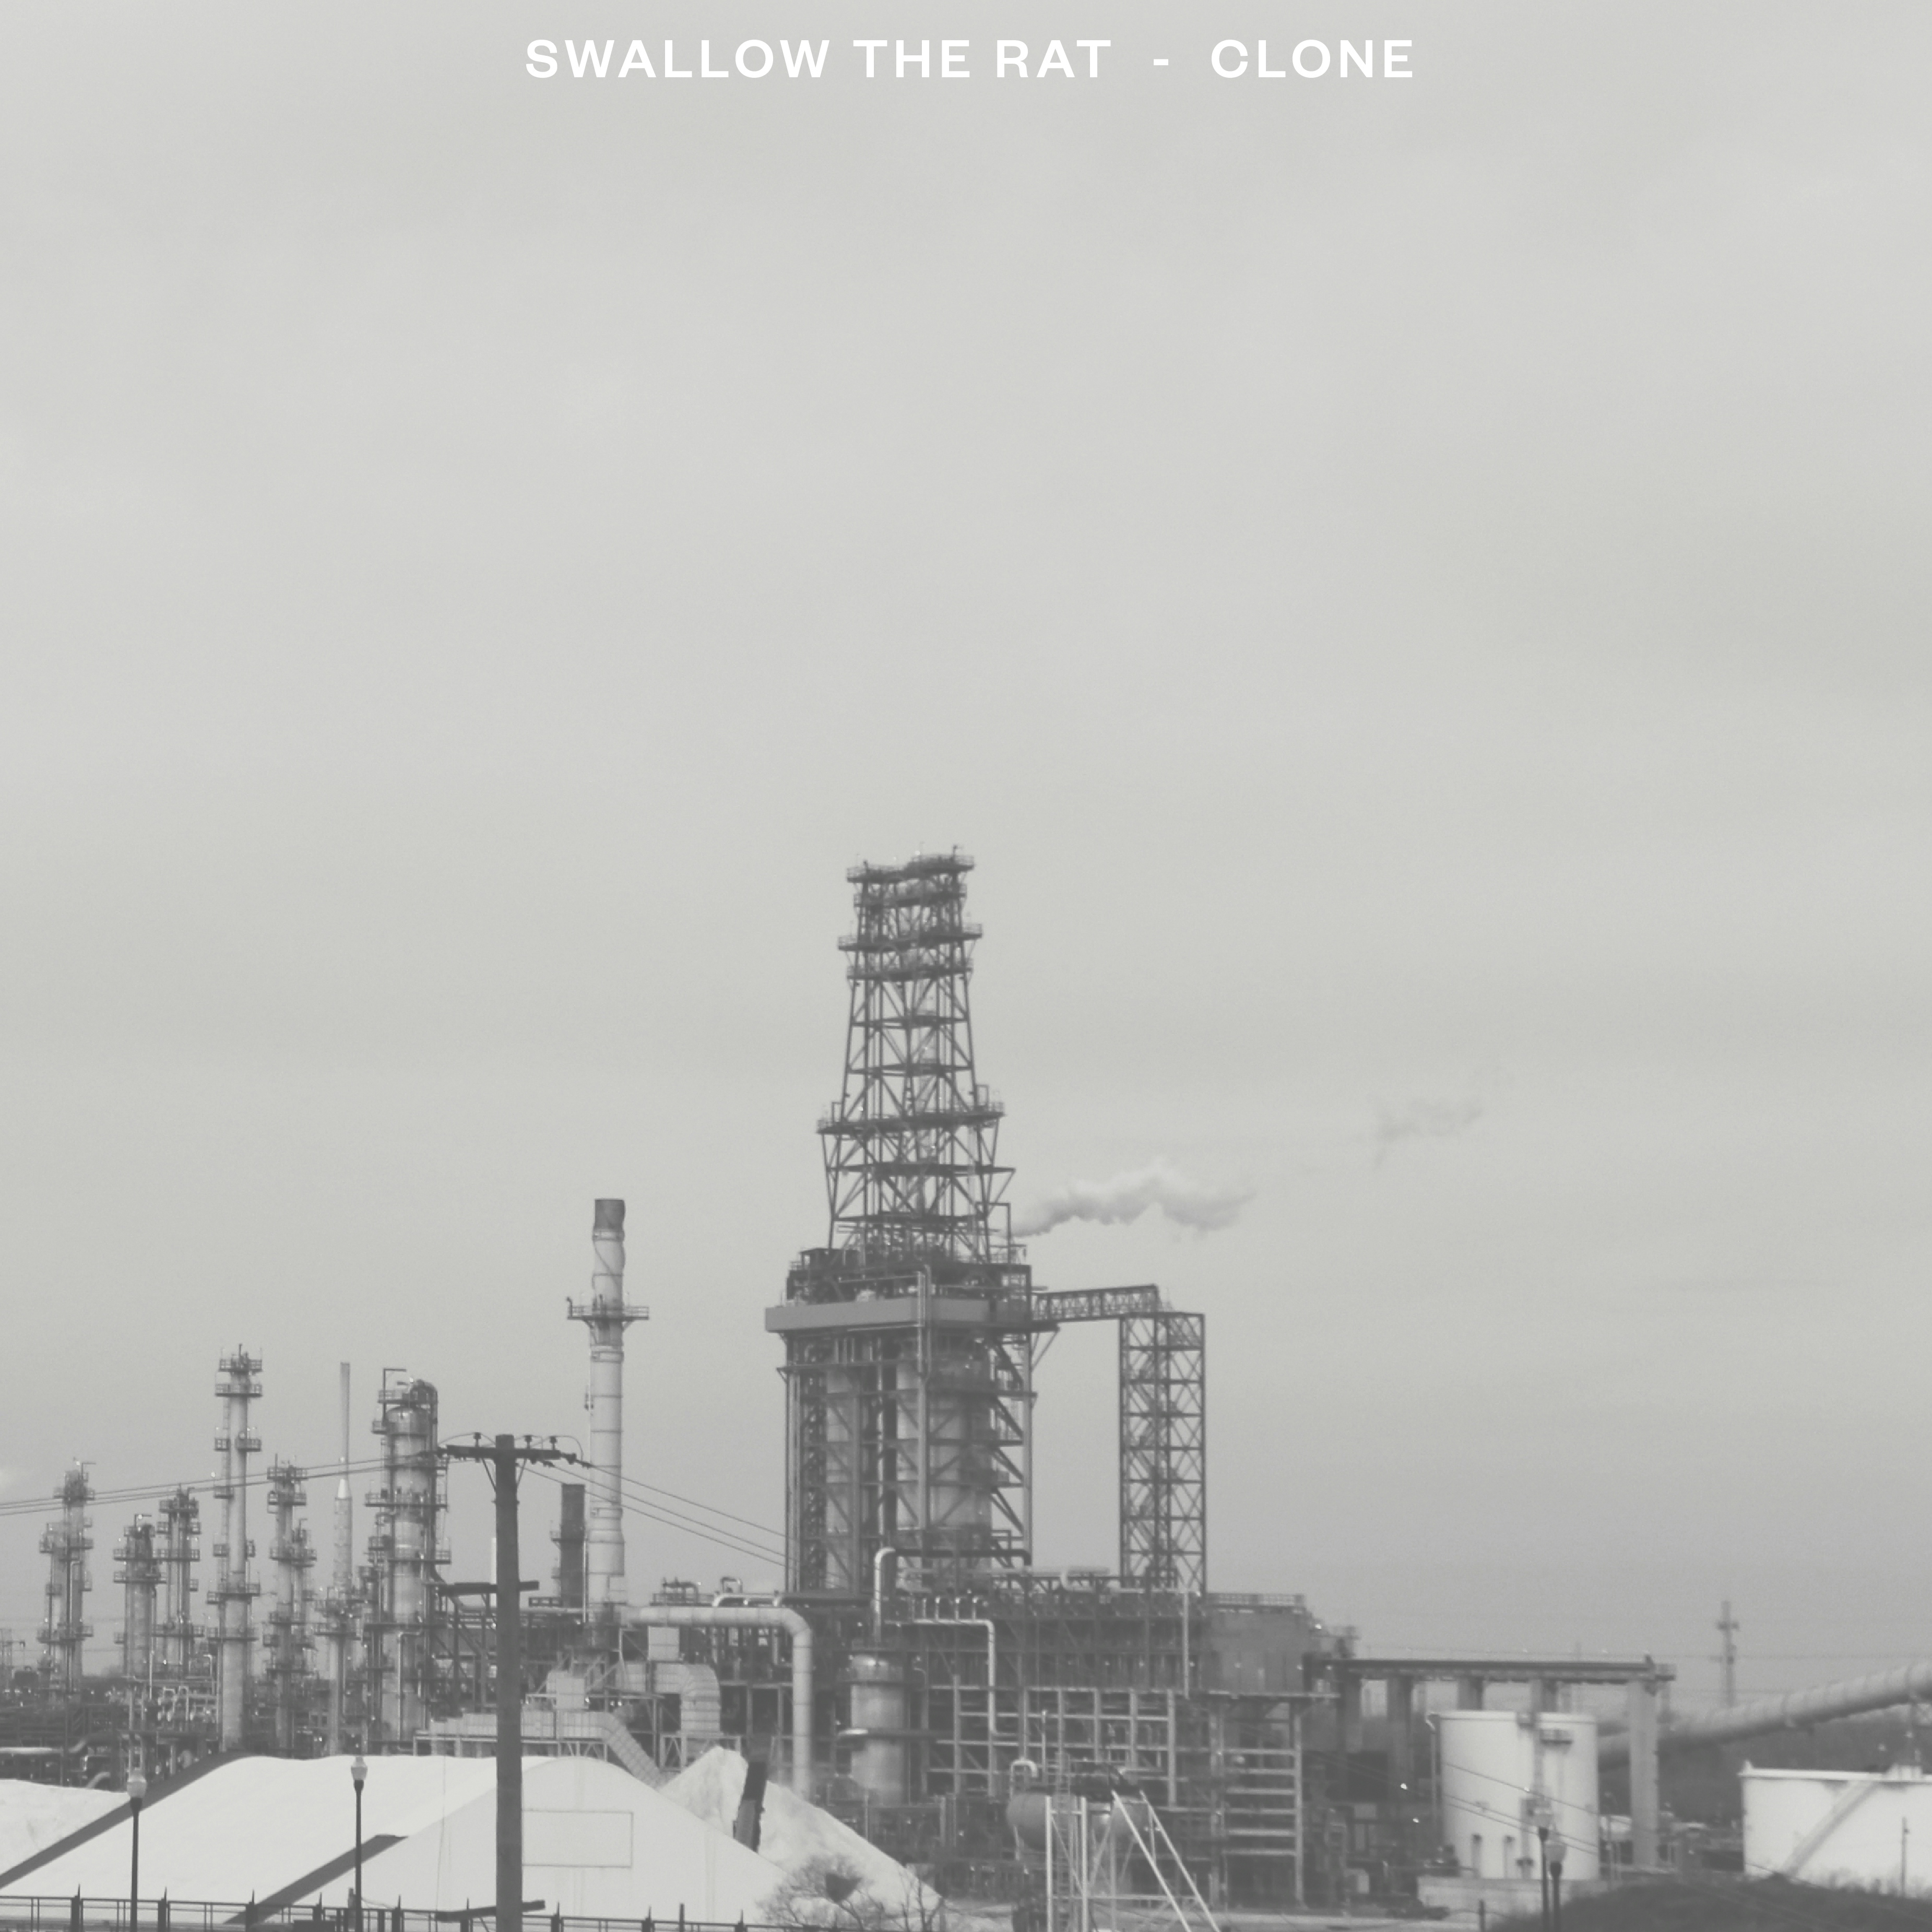 Album artwork for Album artwork for Swallow the Rat - Clone by Swallow the Rat / Clone by Swallow the Rat - Clone - Swallow the Rat / Clone